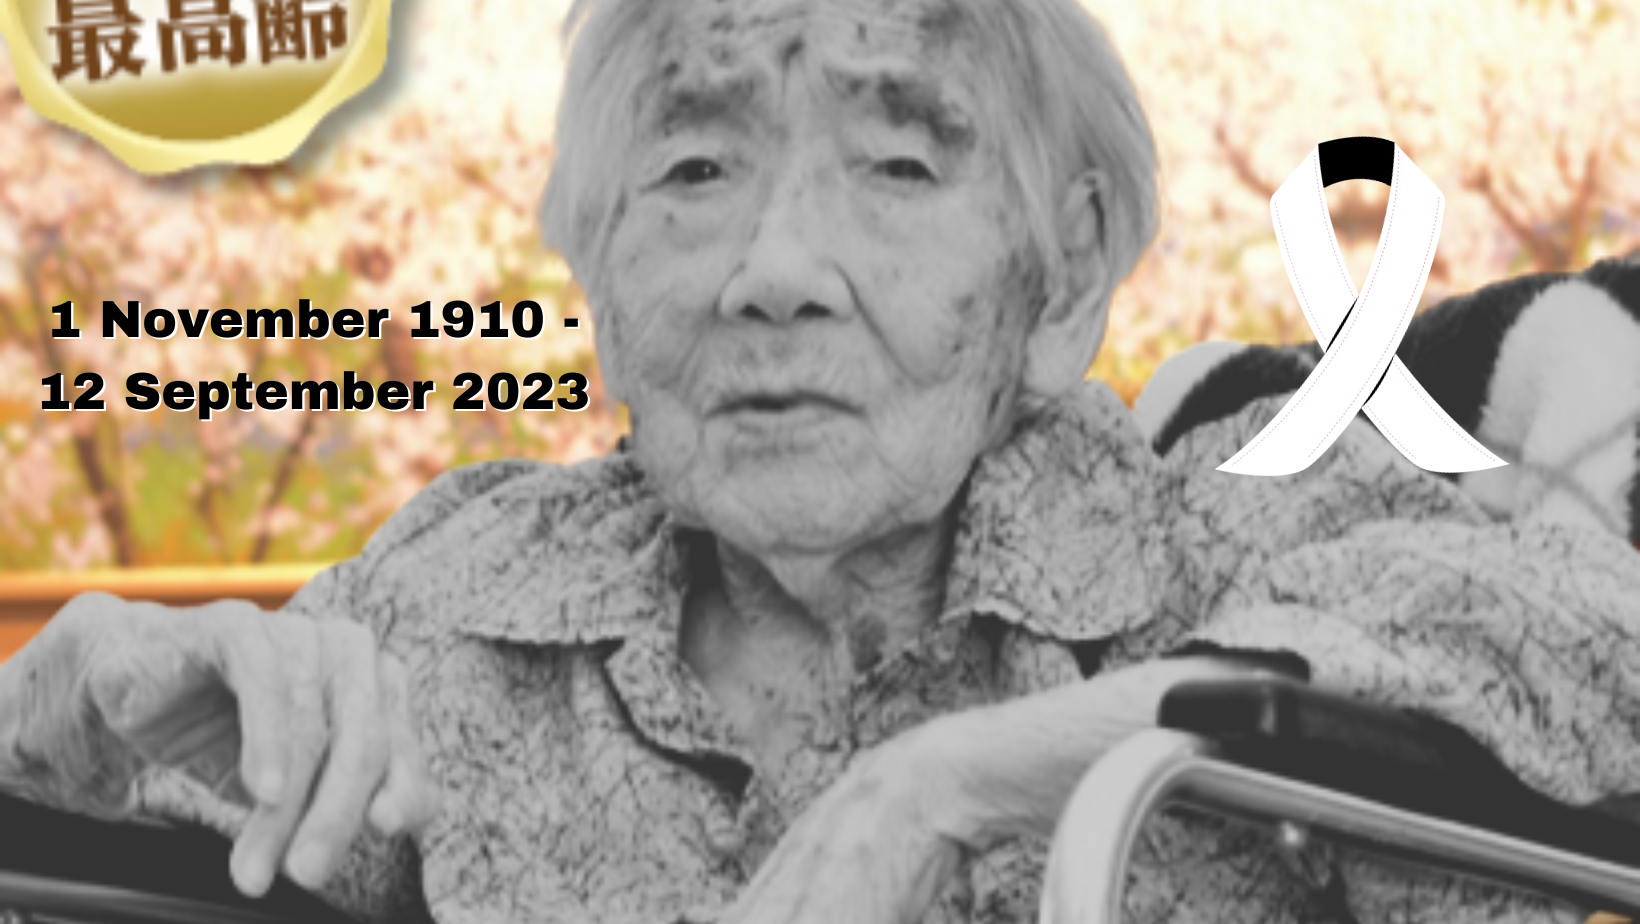 Kikuyo Honma passed away at 112